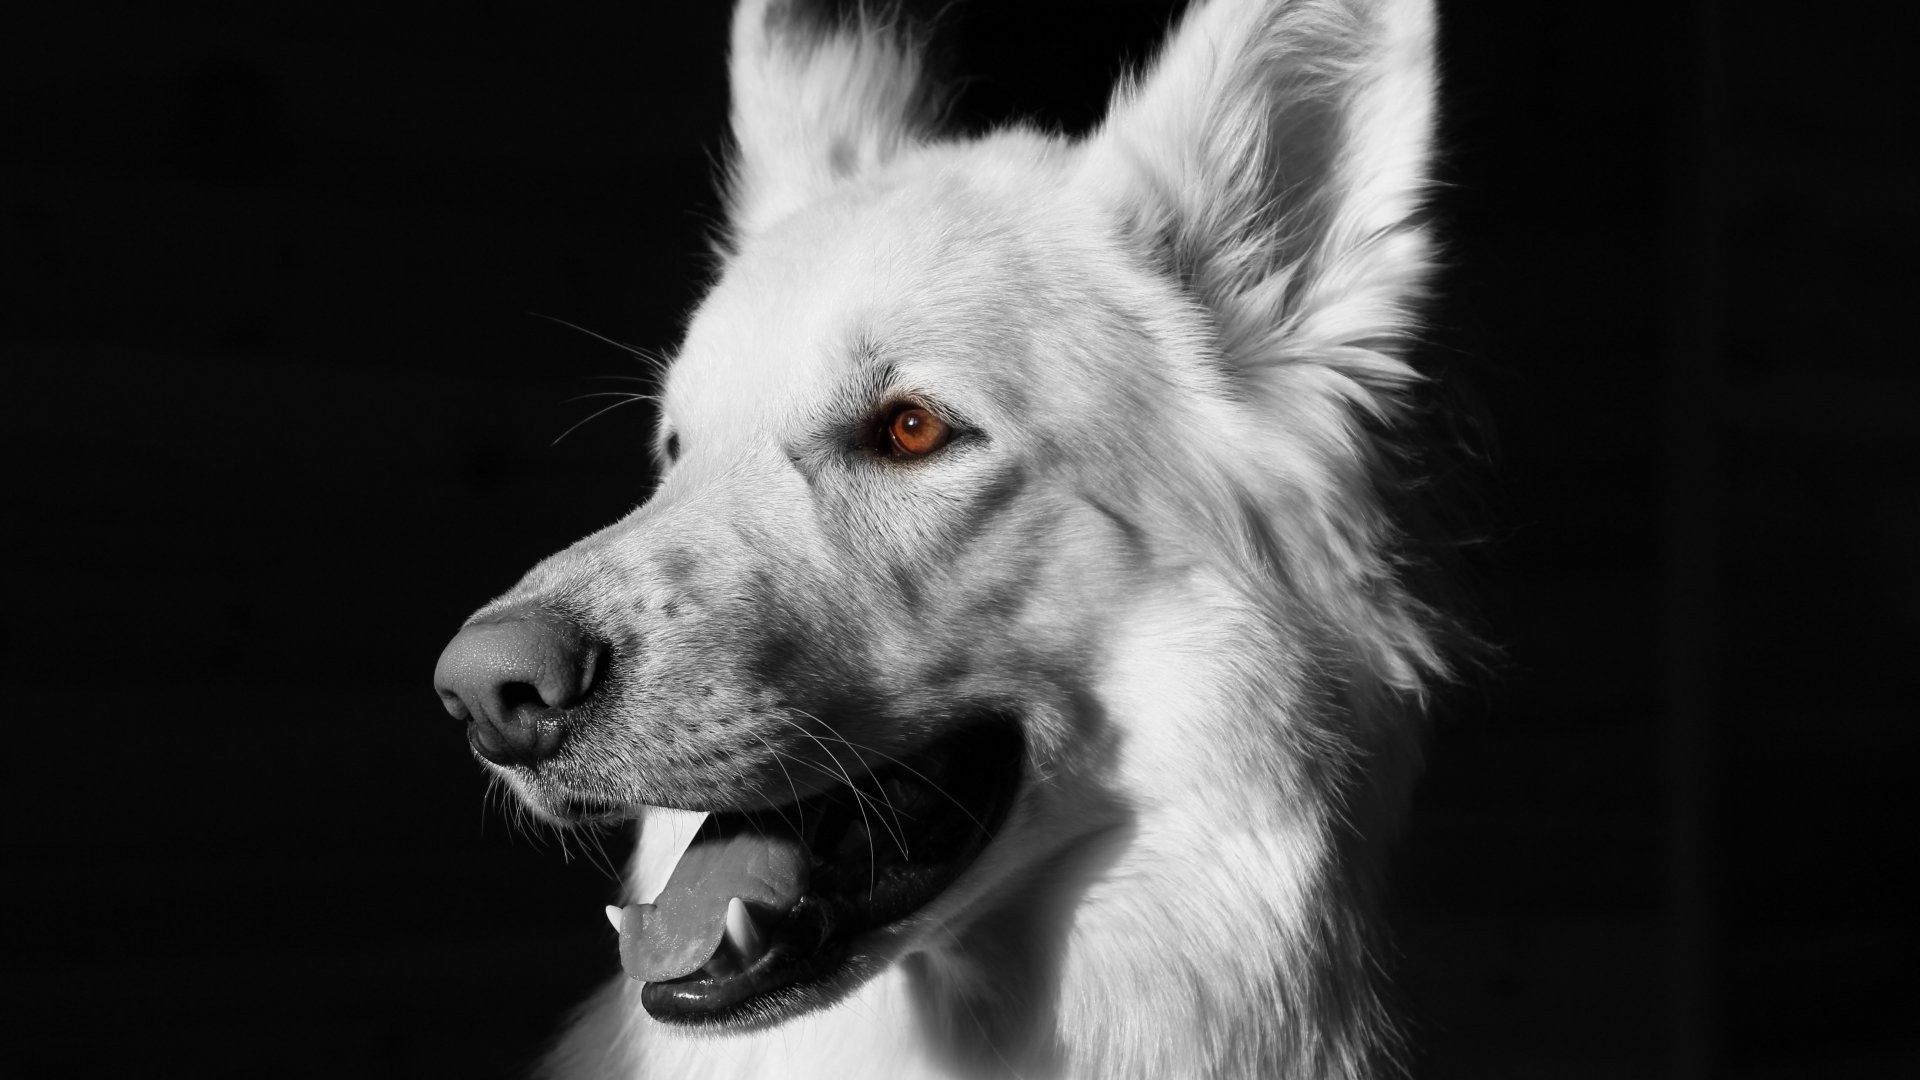 Wallpapers monochrome dog mammal on the desktop